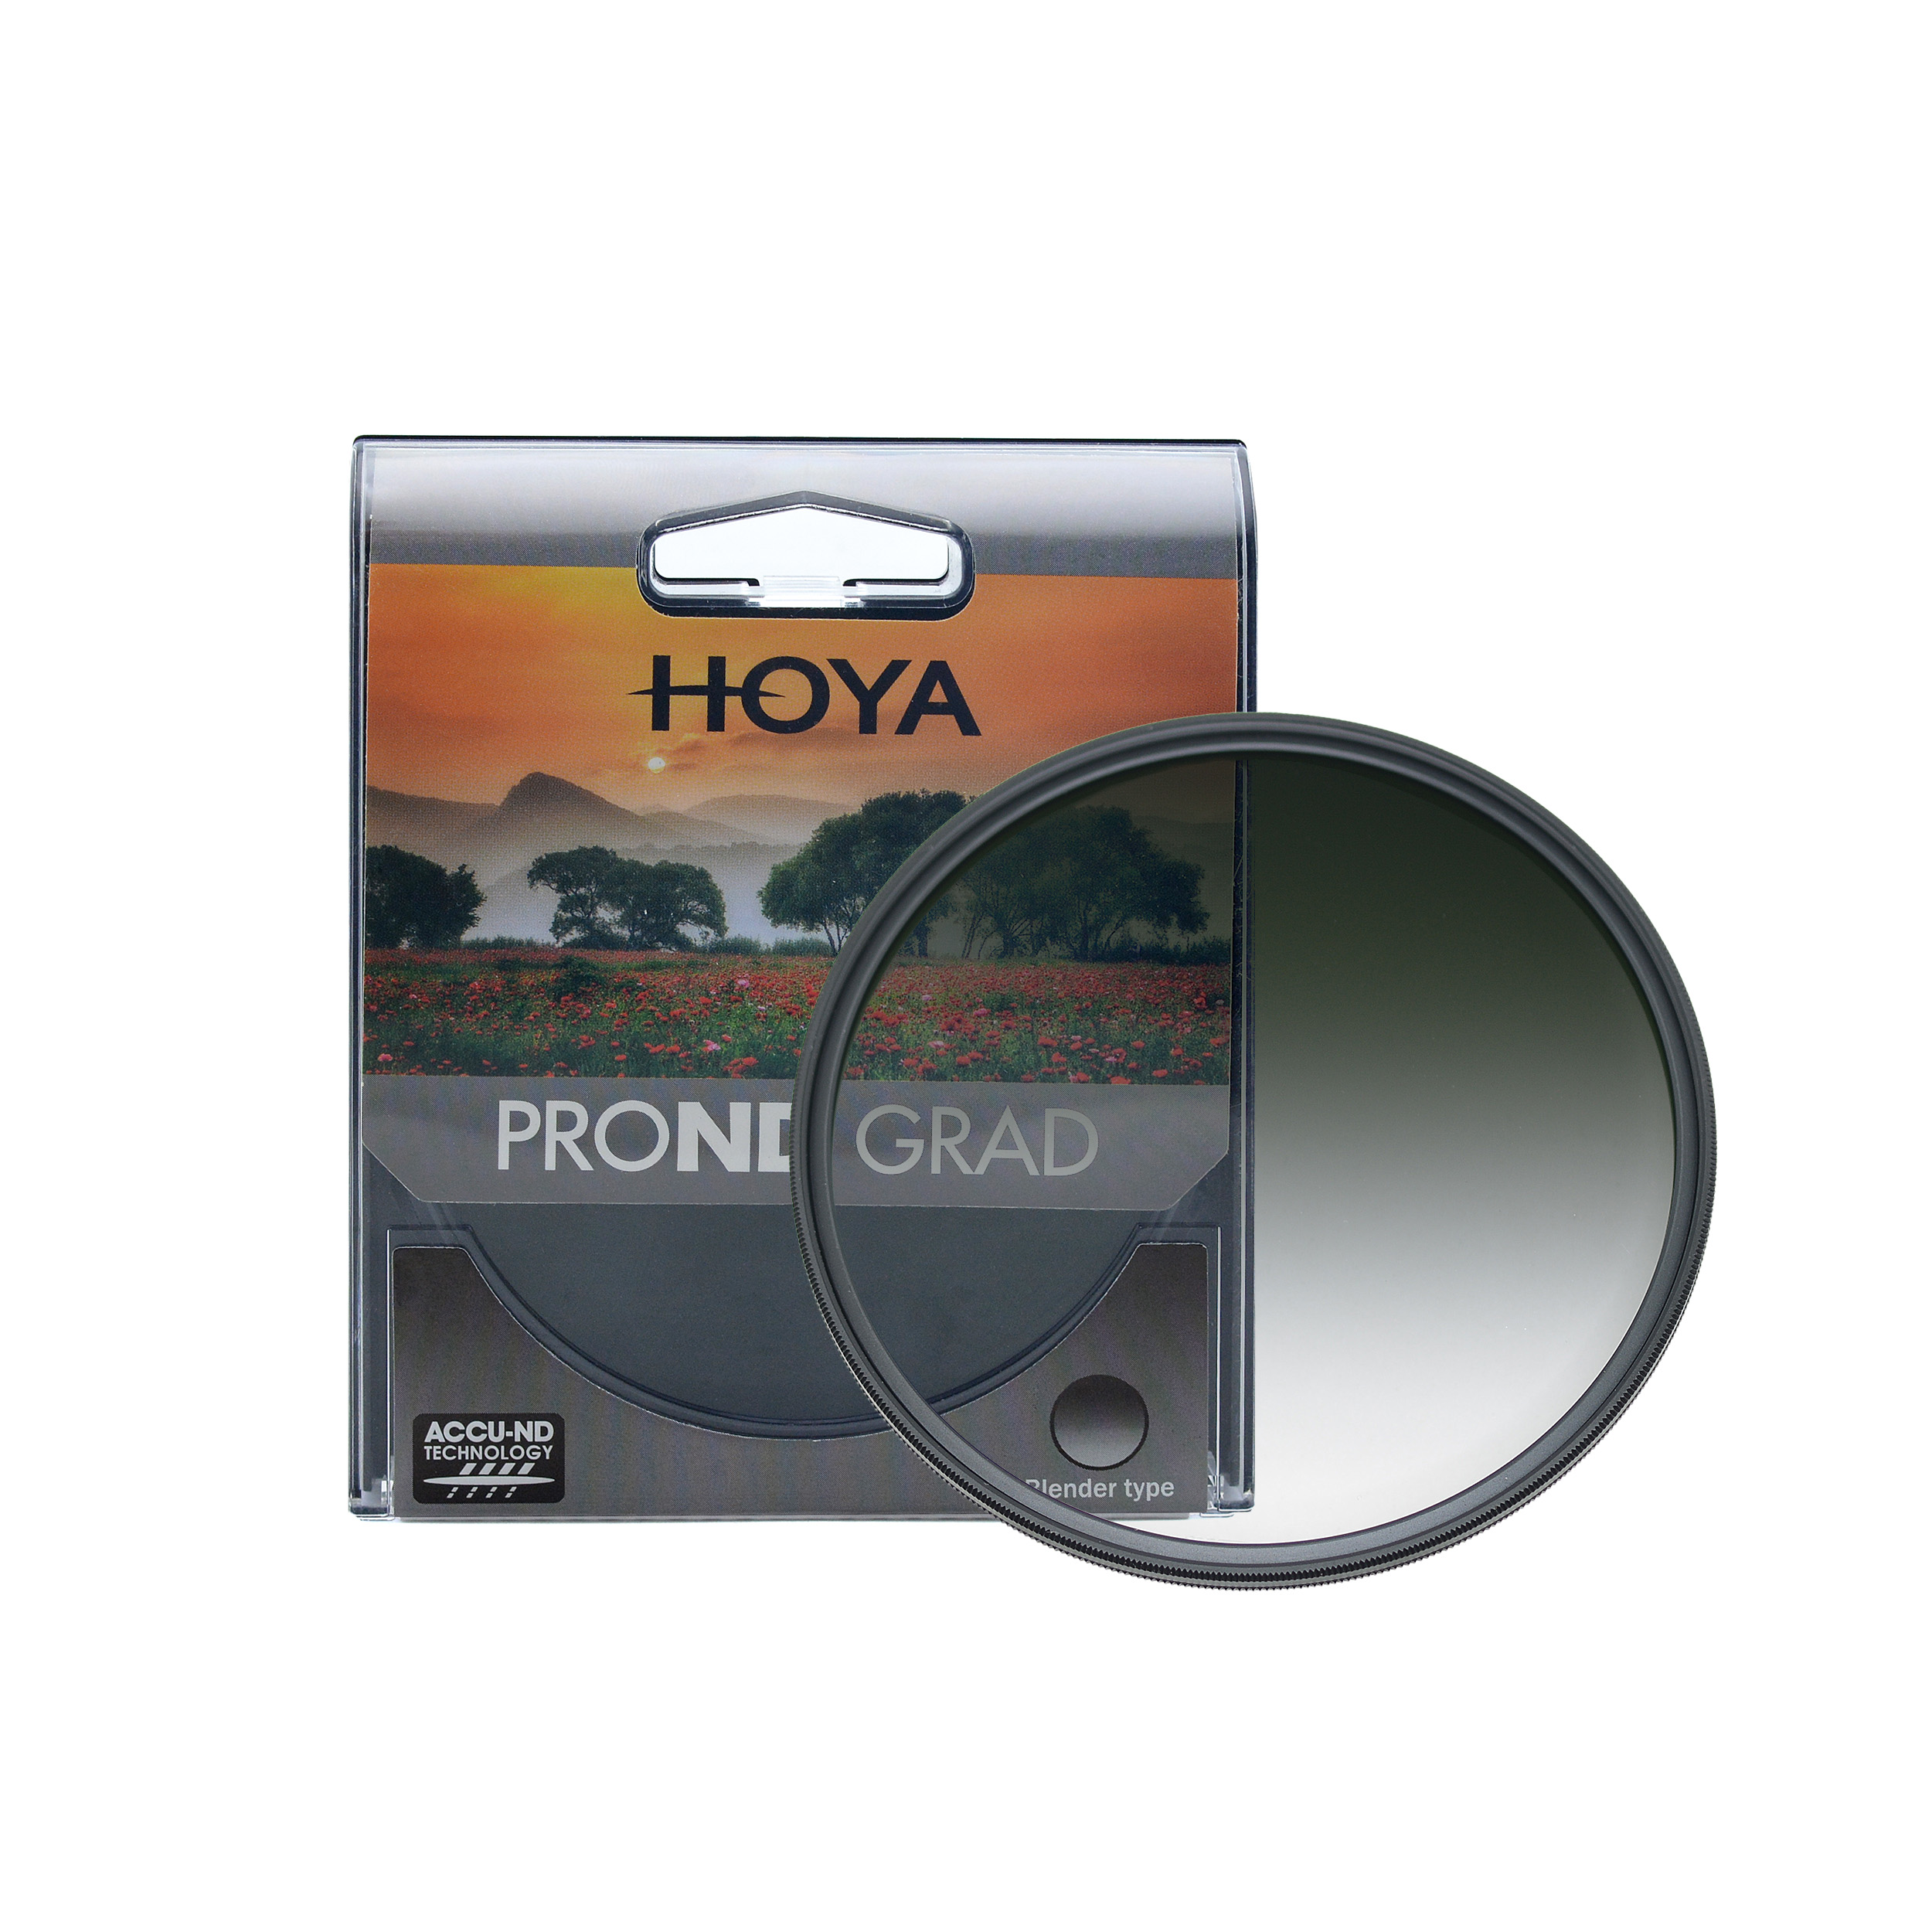 HOYA PROND32 GRAD